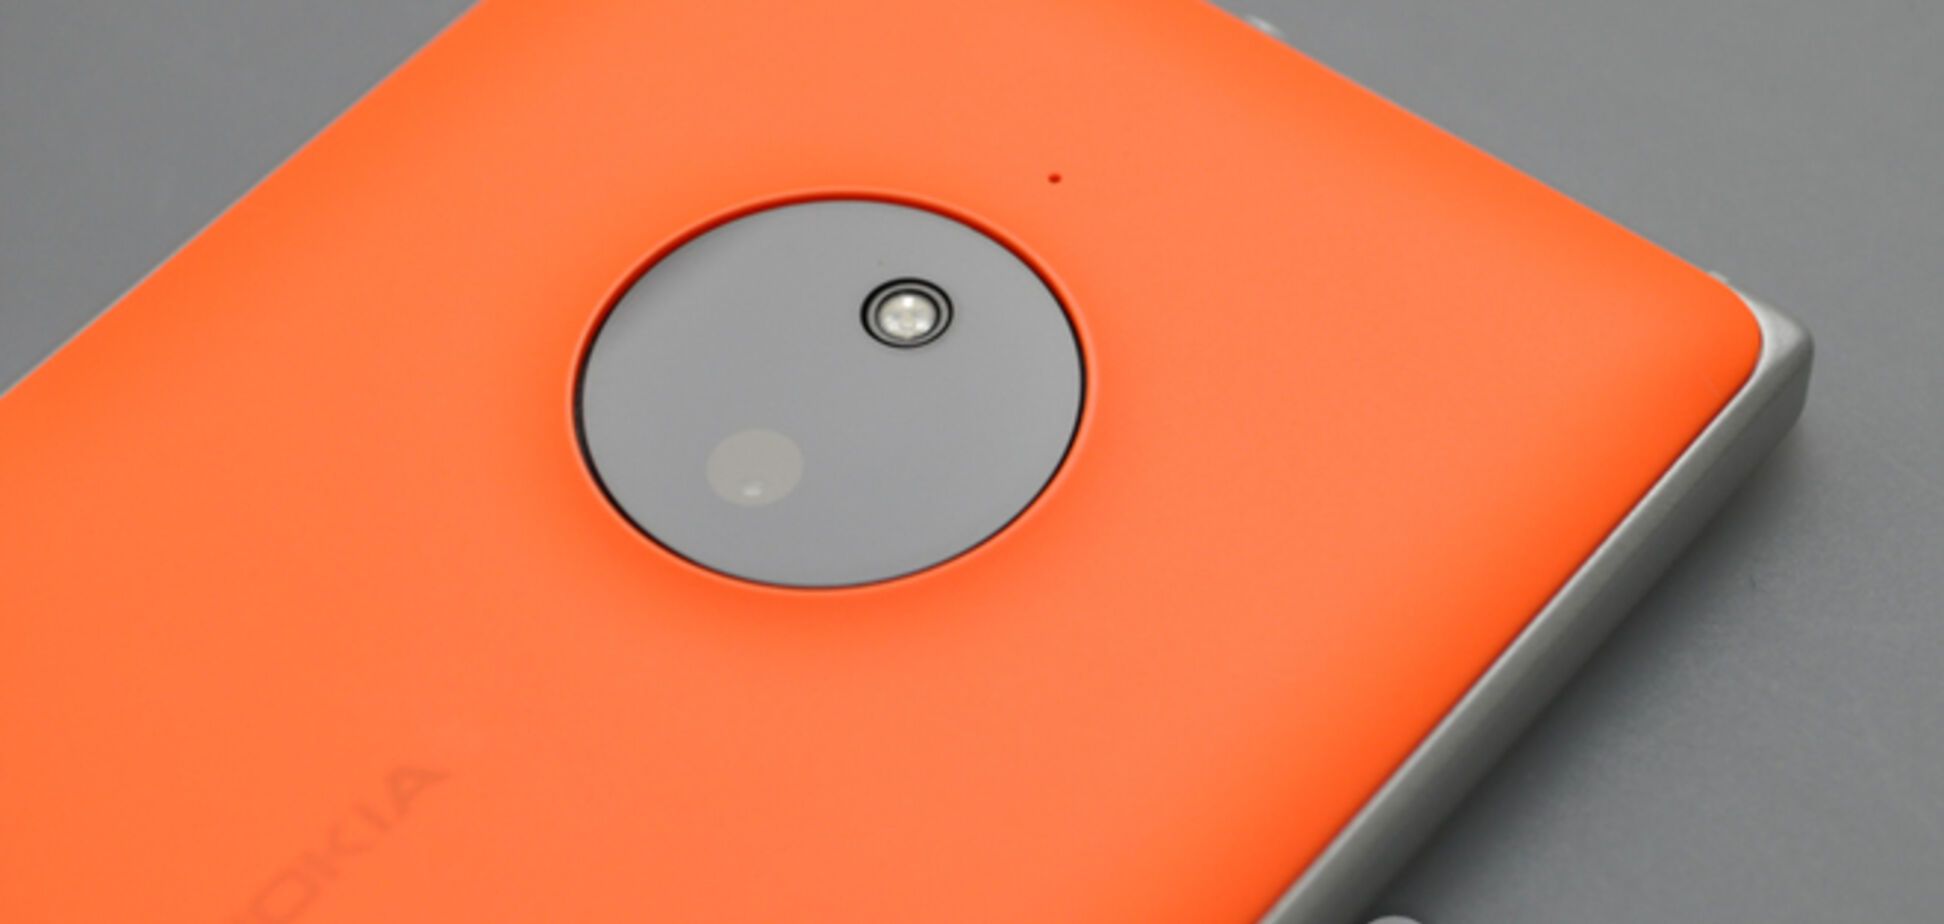 Обзор Nokia Lumia 830: смартфон, который флагман лишь наполовину